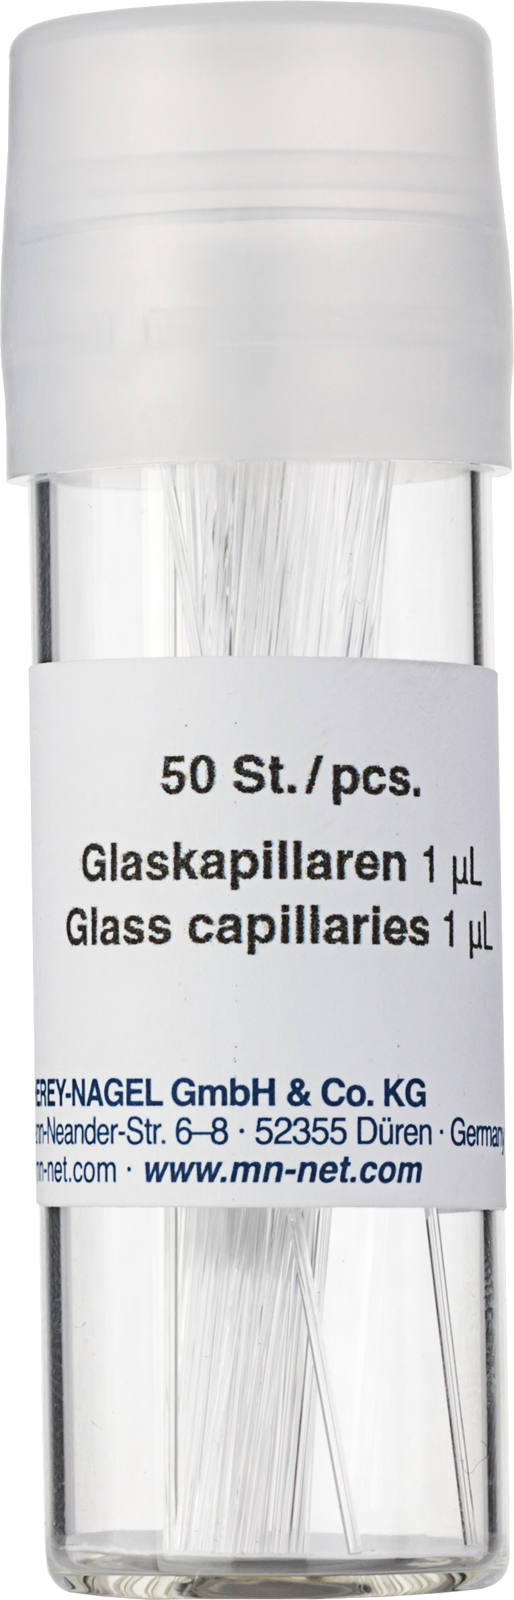 Glas-Kapillaren, 1 µl